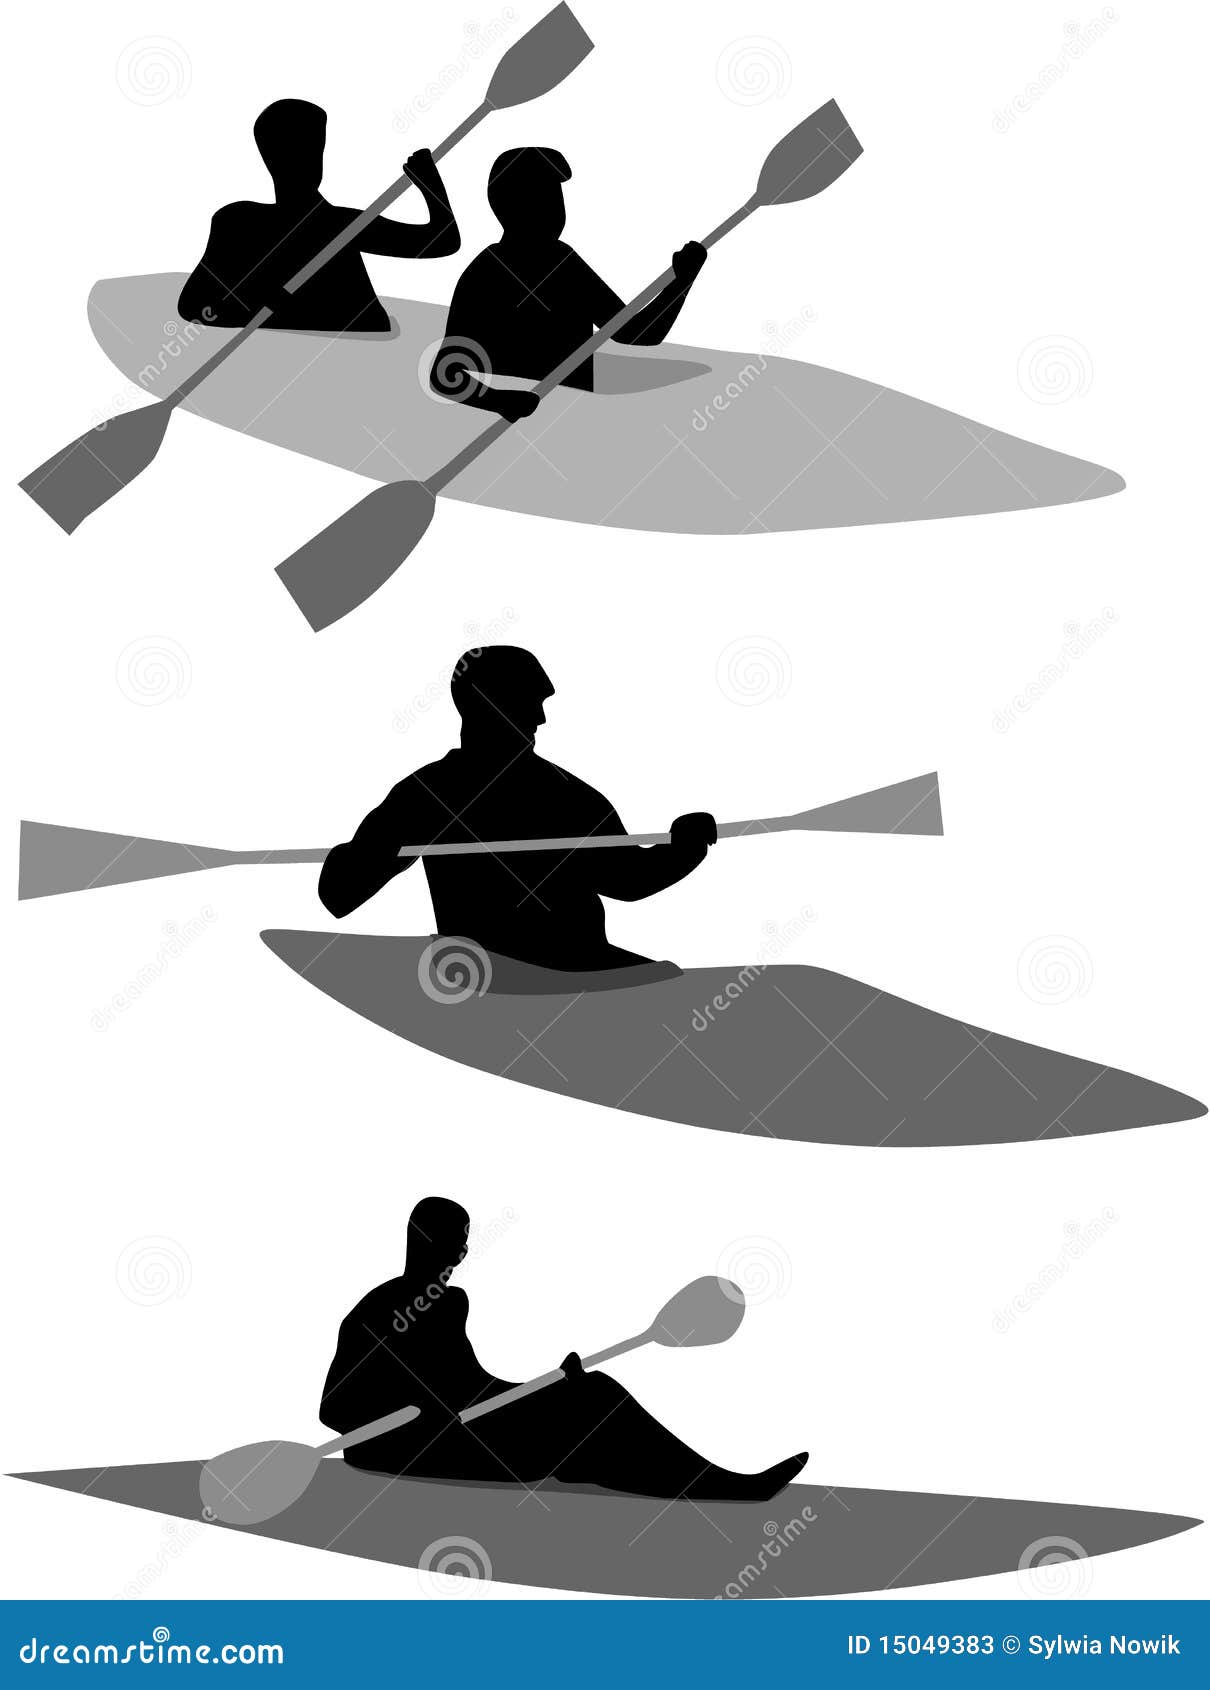 kayak silhouette clip art - photo #46